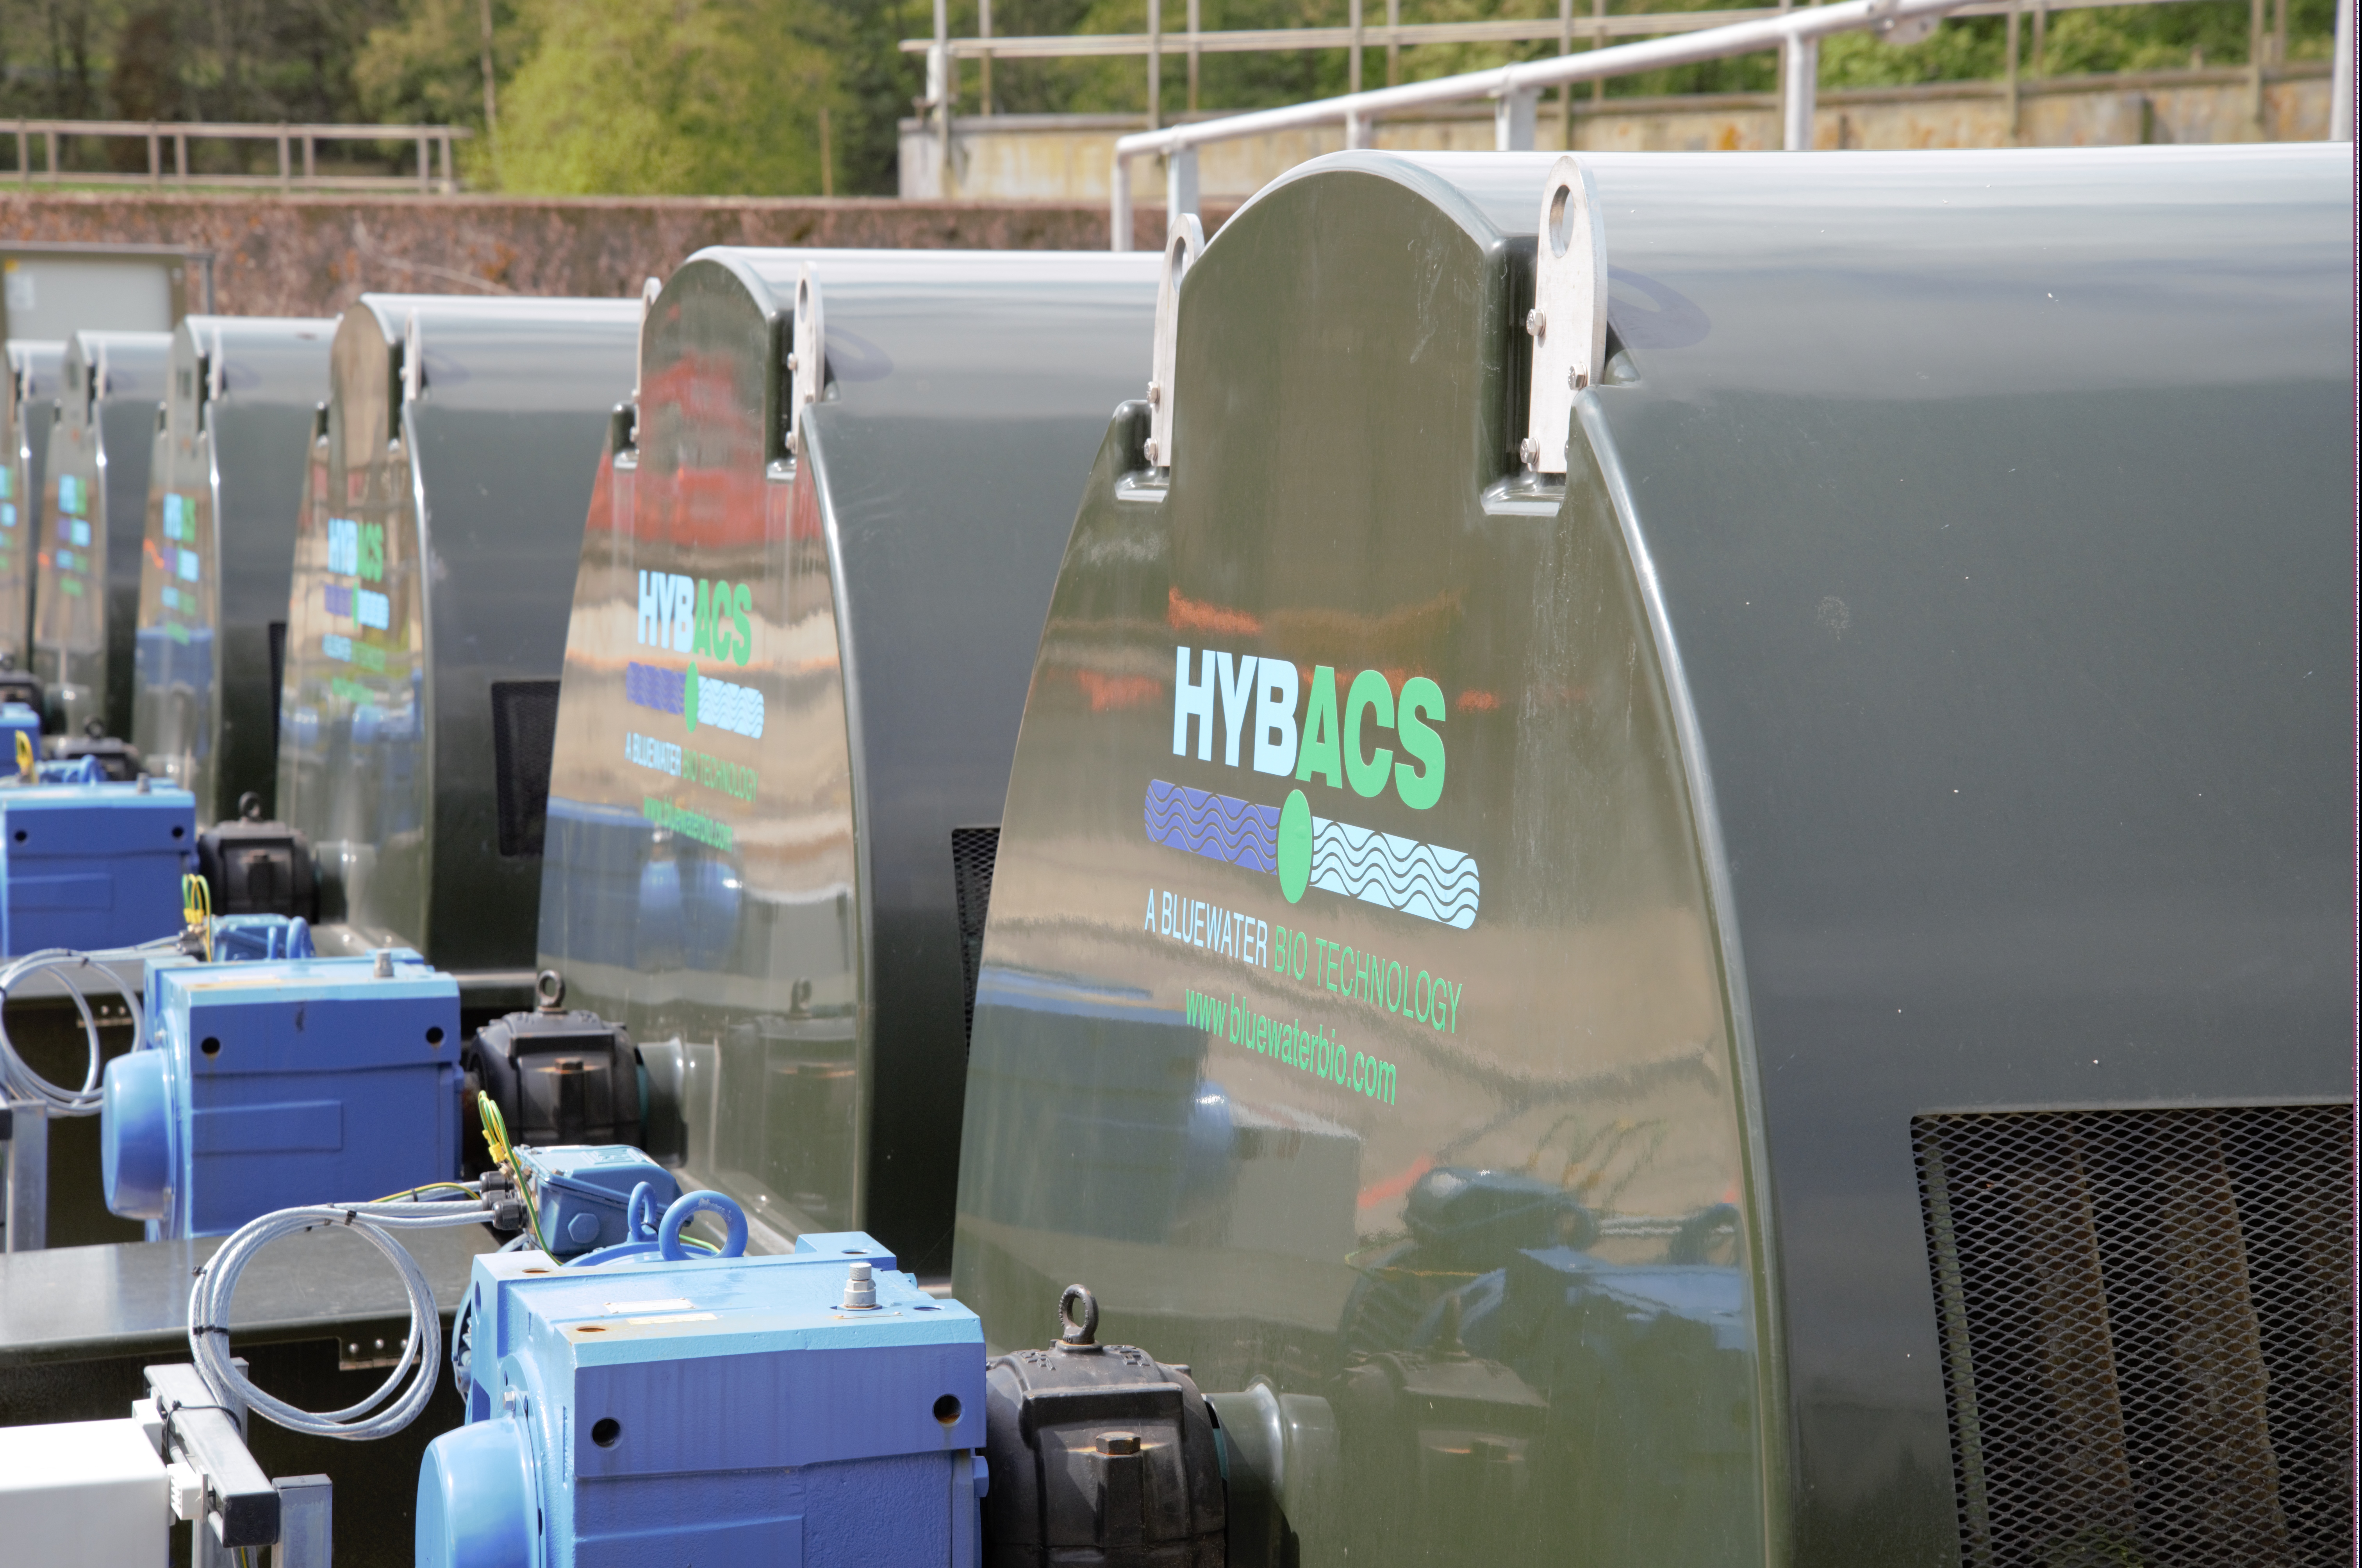 HYBACS Hybrid Activated Sludge